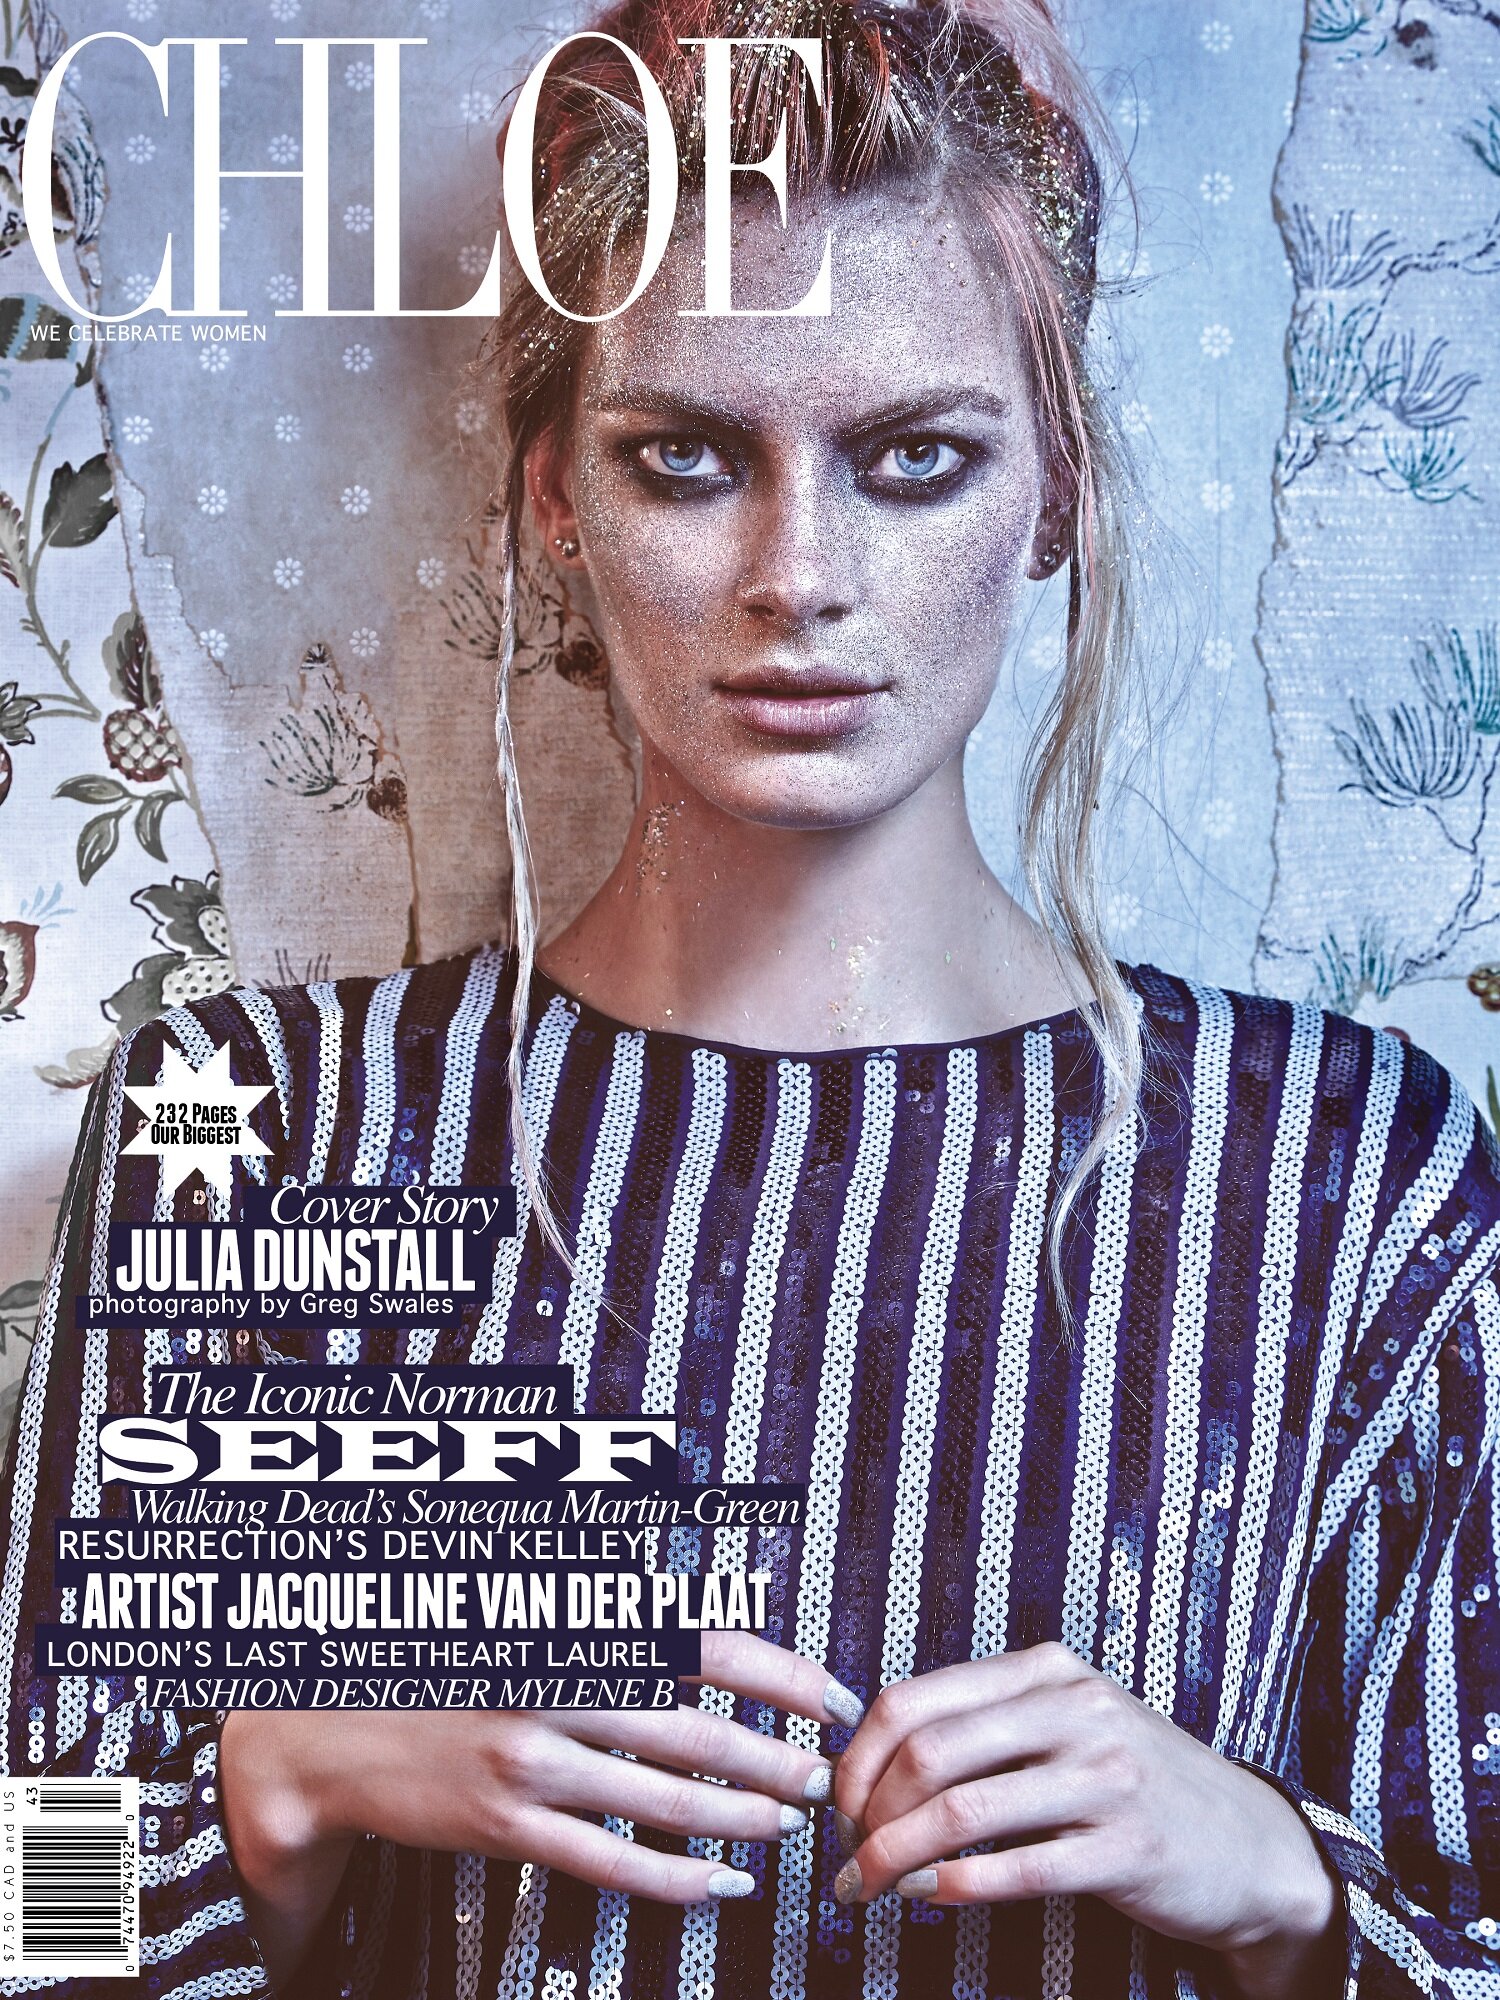 CHLOE Magazine Fall Winter rev inside copy 3 - Copie.jpg